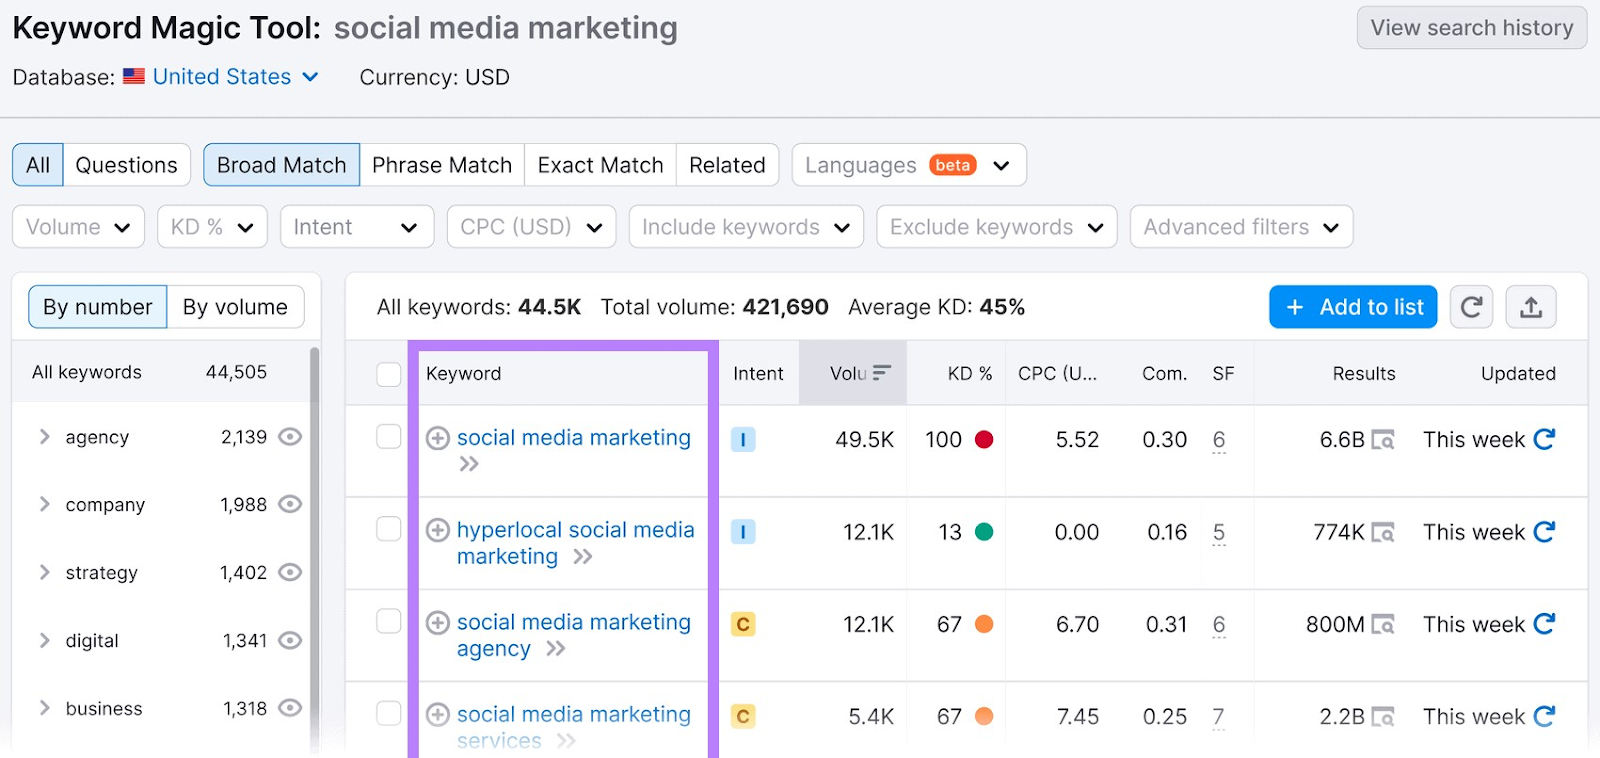 Keyword Magic Tool results for "social media marketing" keyword